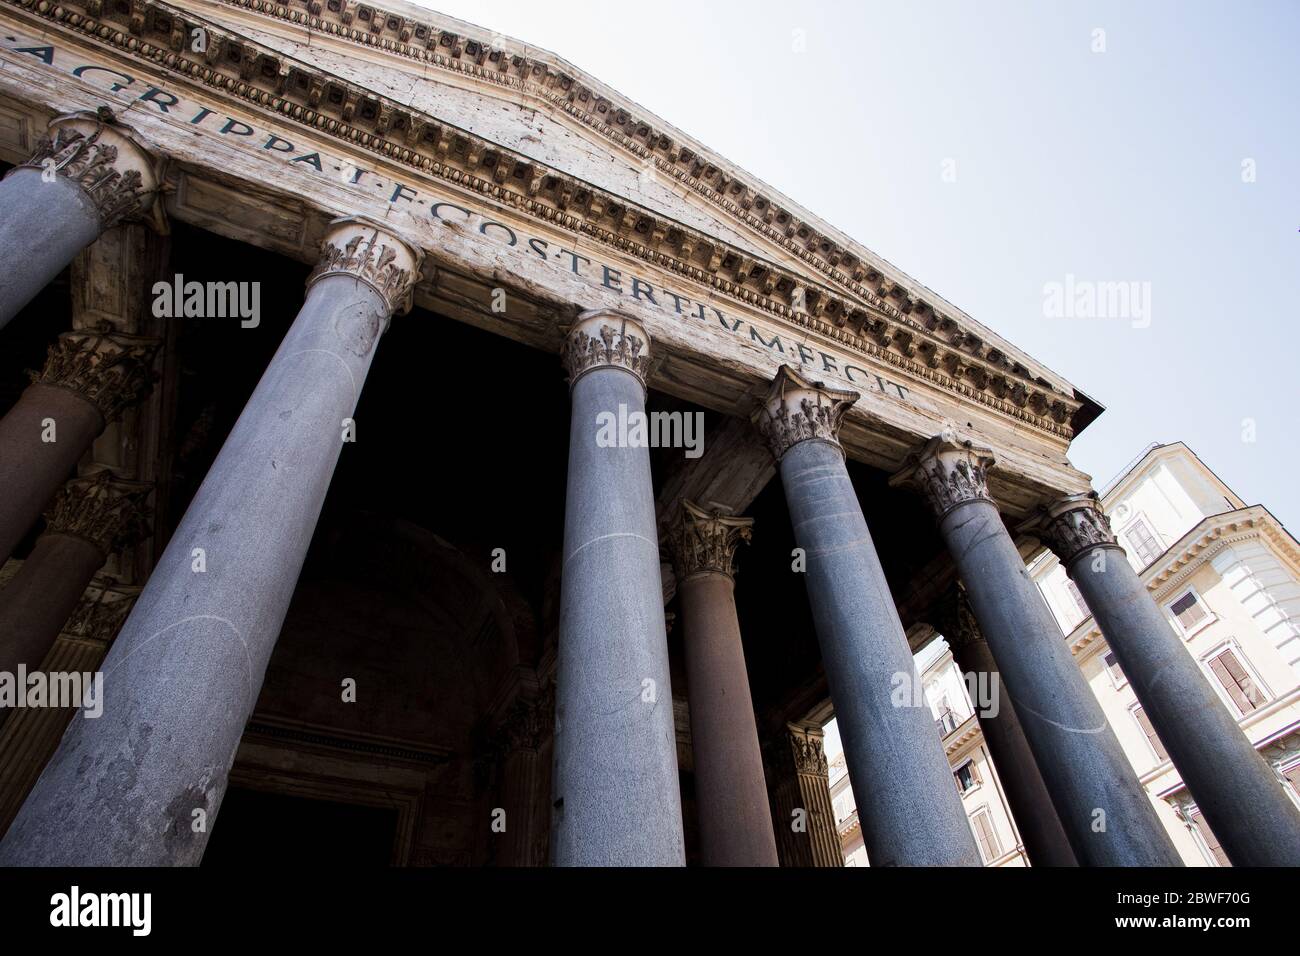 Pantheon in Rome Stock Photo